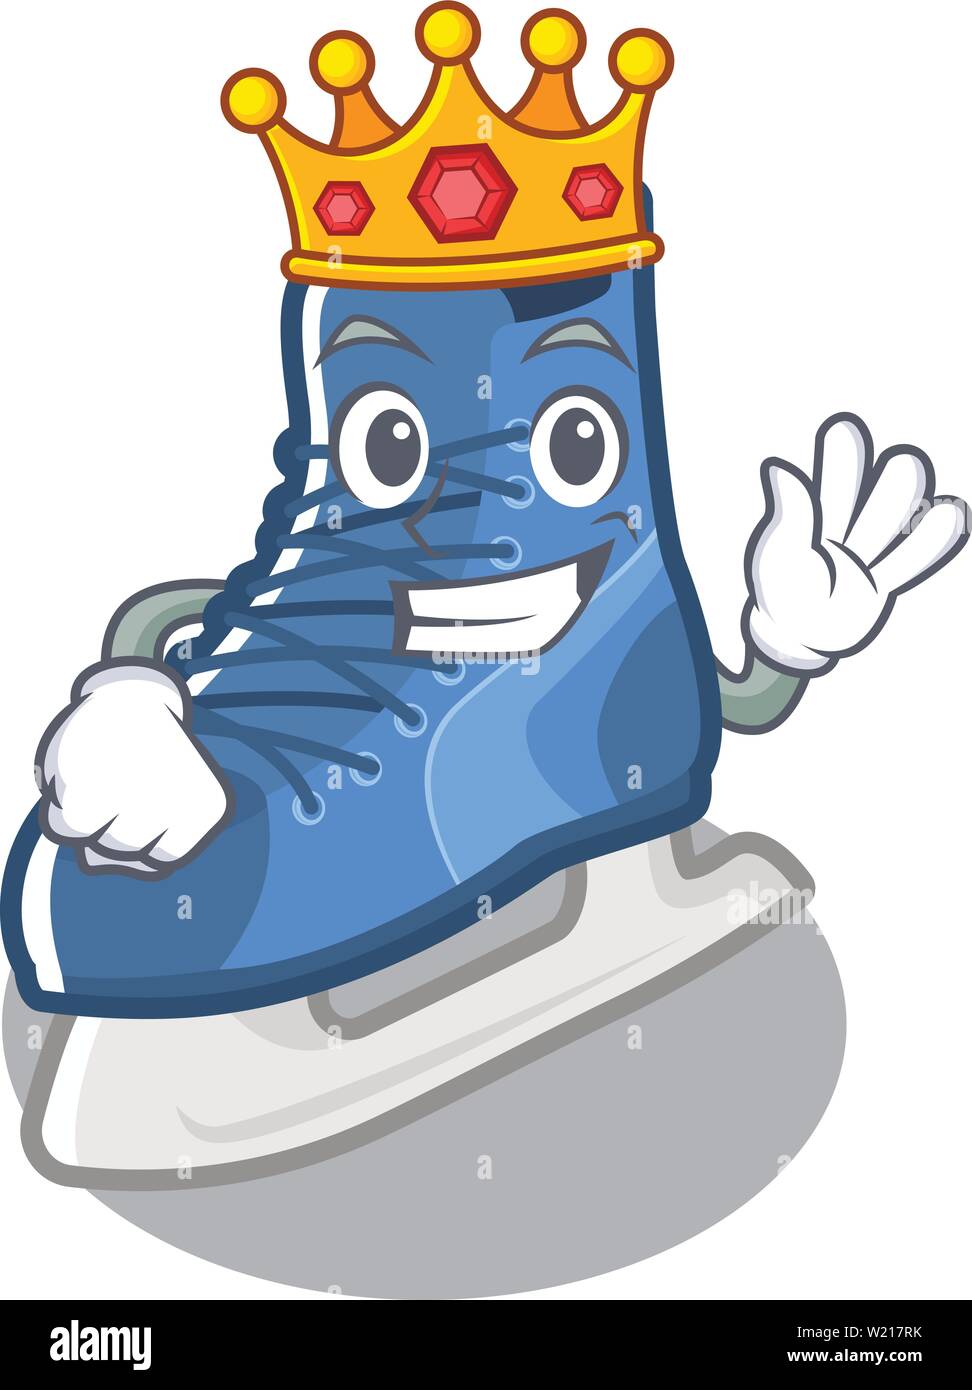 König Eislaufen auf einem Cartoon Stuhl Stock-Vektorgrafik - Alamy